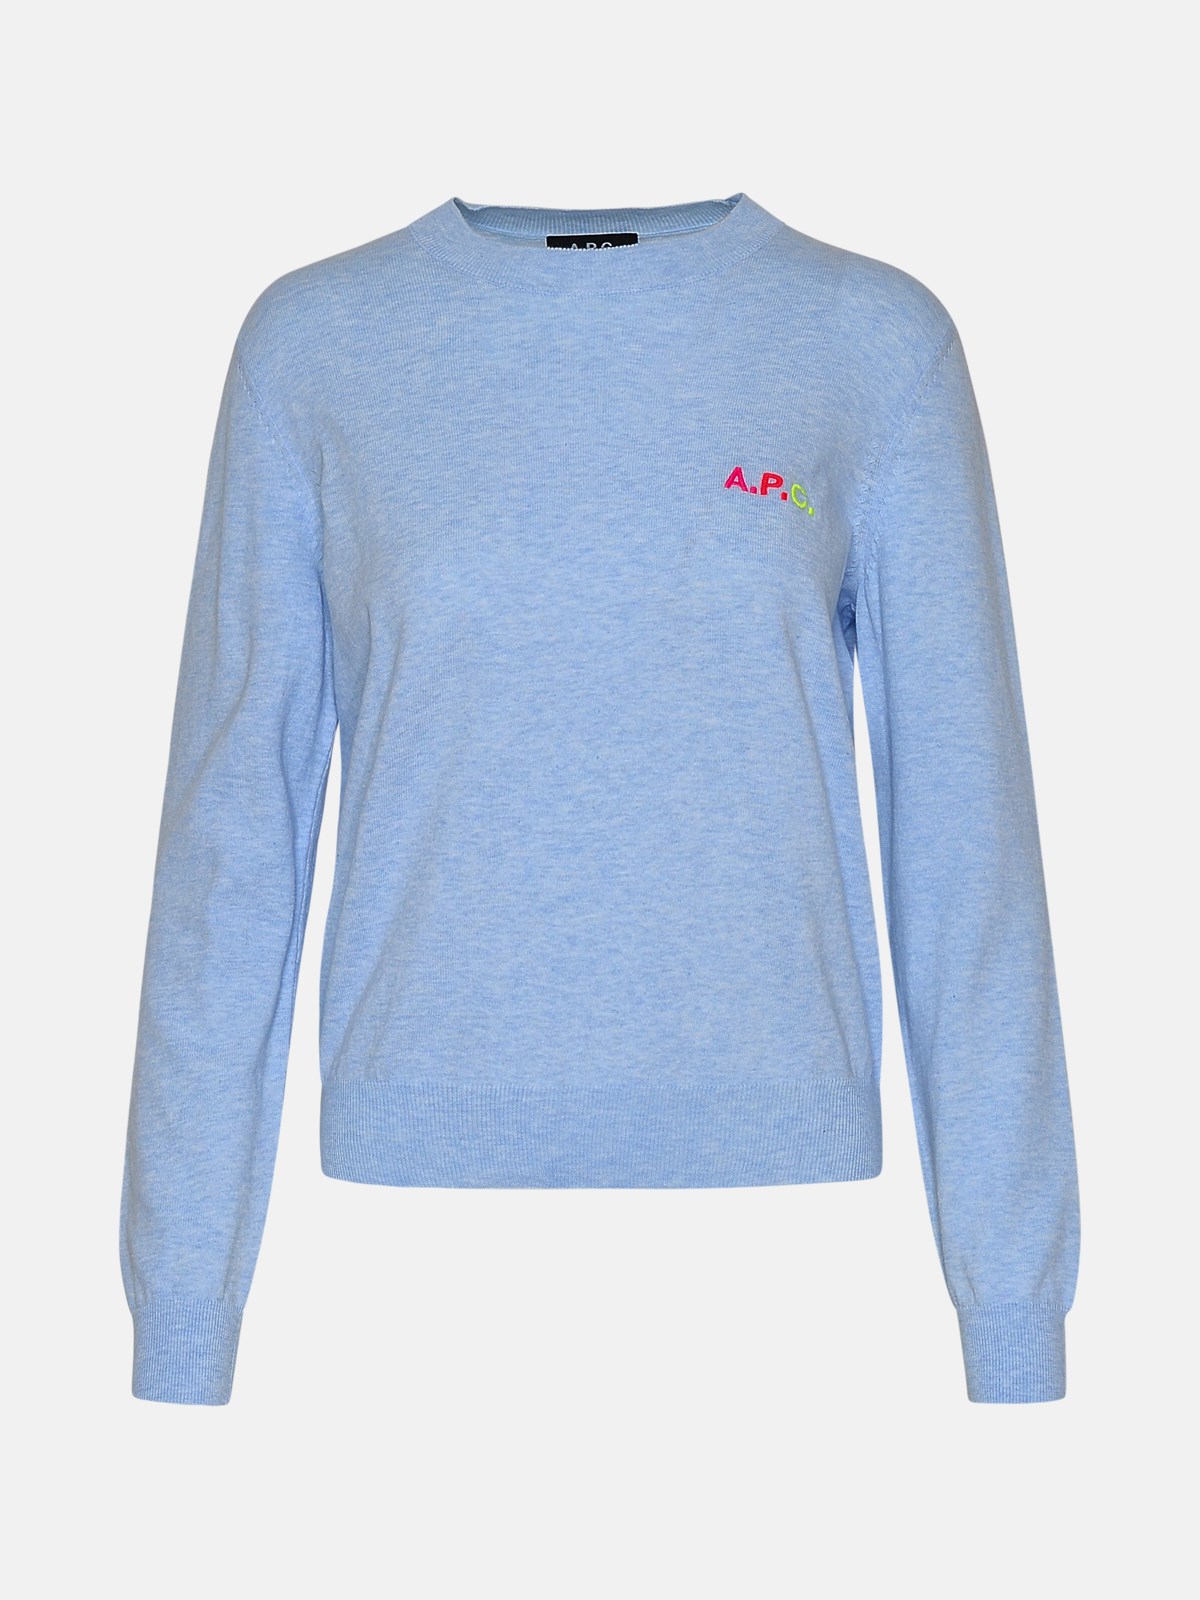 Apc True Light Blue Cotton Sweater